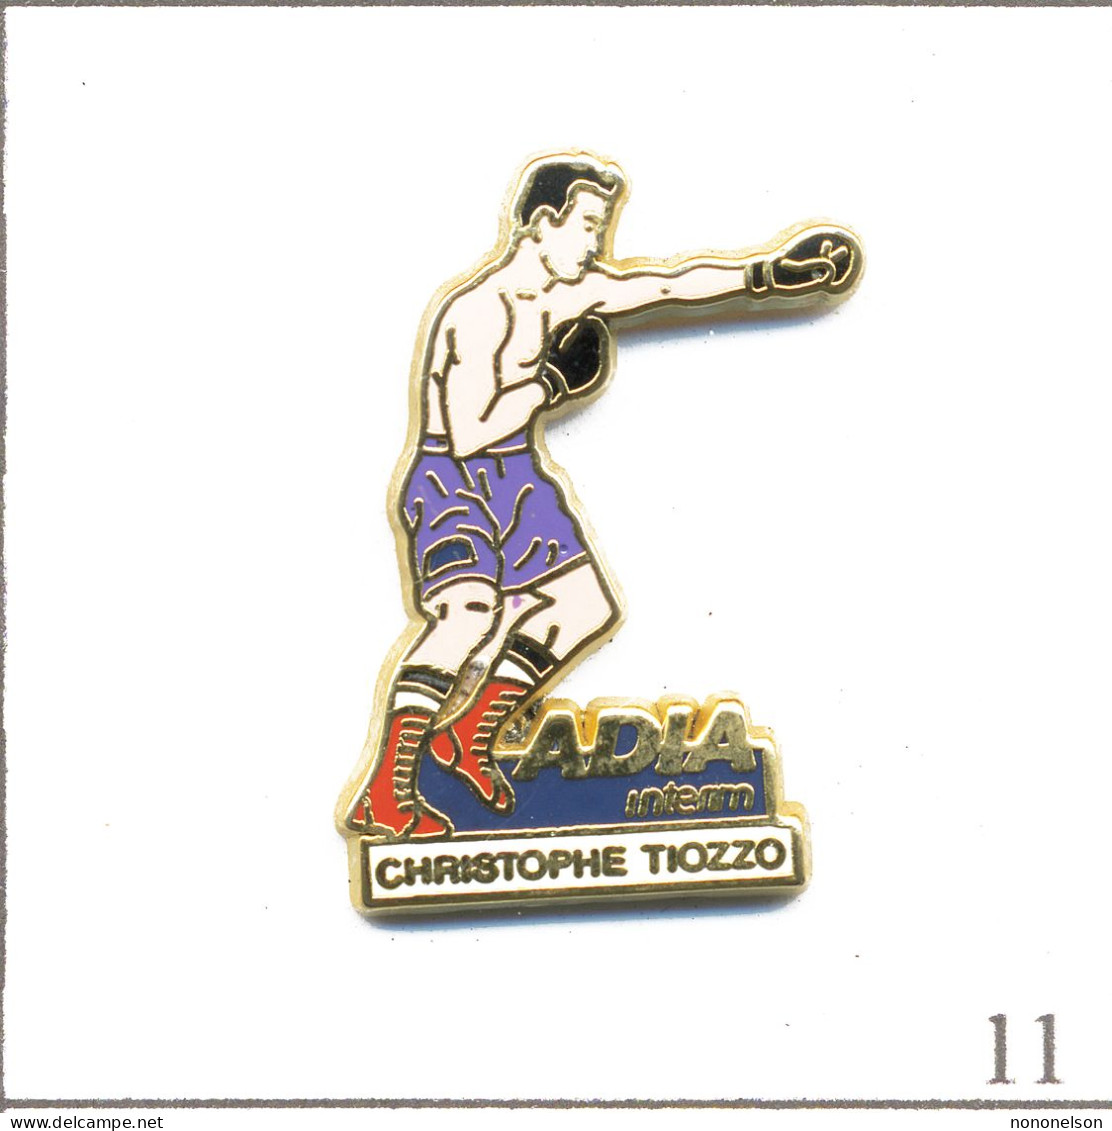 Pin's Sport - Boxe / Christophe Tiozzo - Sponsor Adia Intérim. Estampillé Courtois. Zamac. T972-11 - Boxe